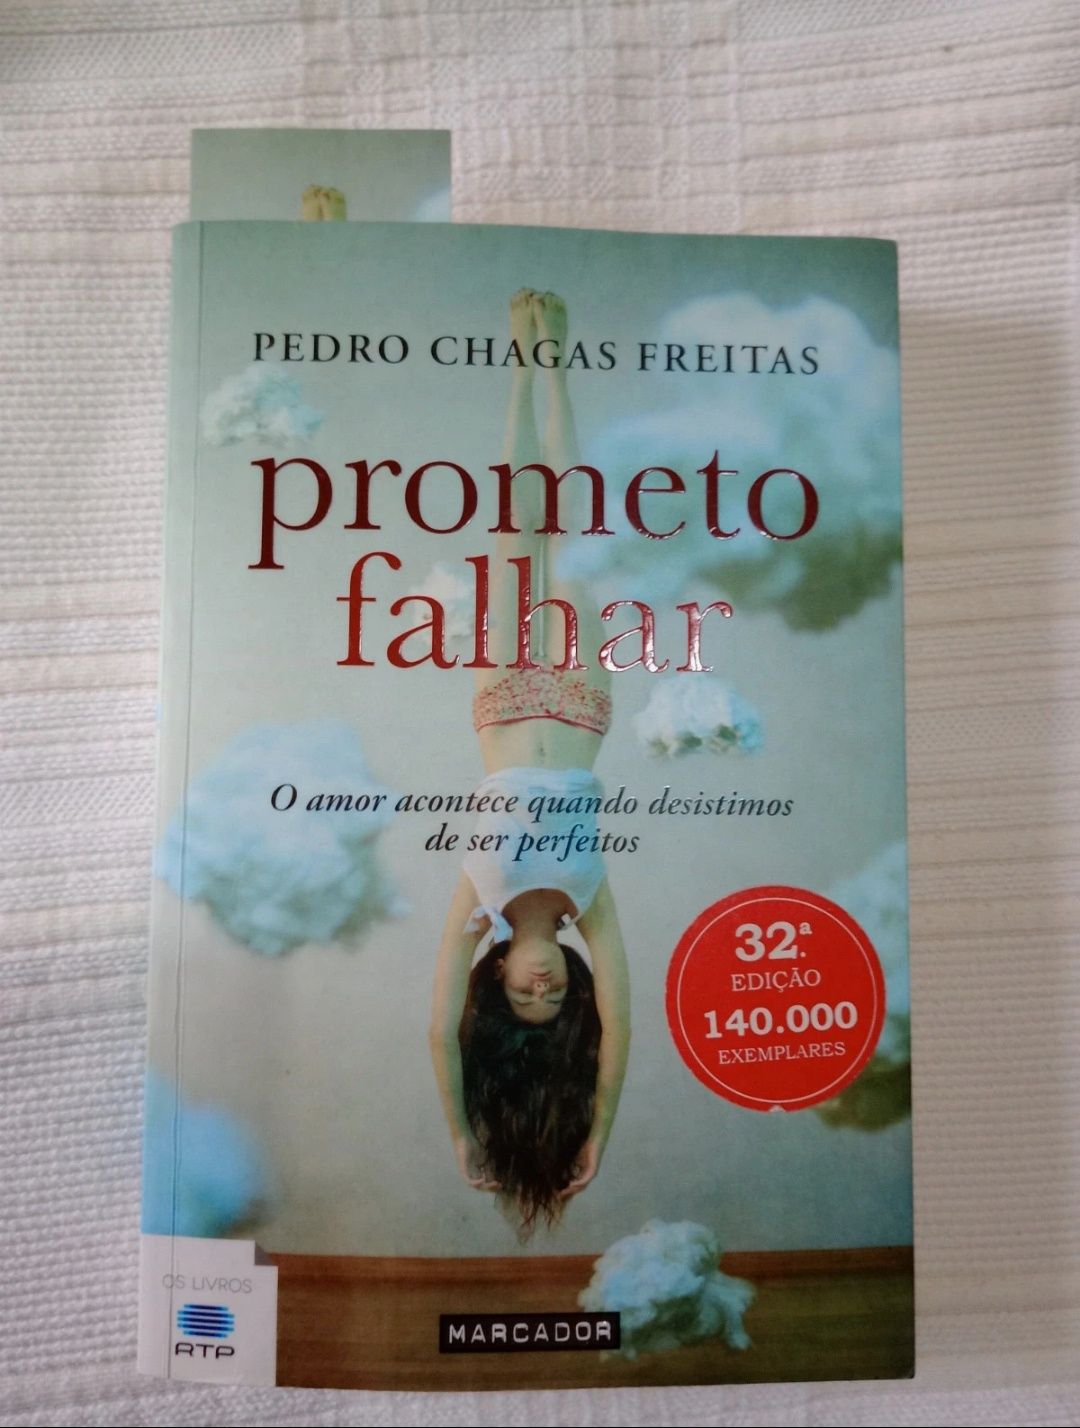 Livro "Prometo Falhar", de Pedro Chagas Freitas